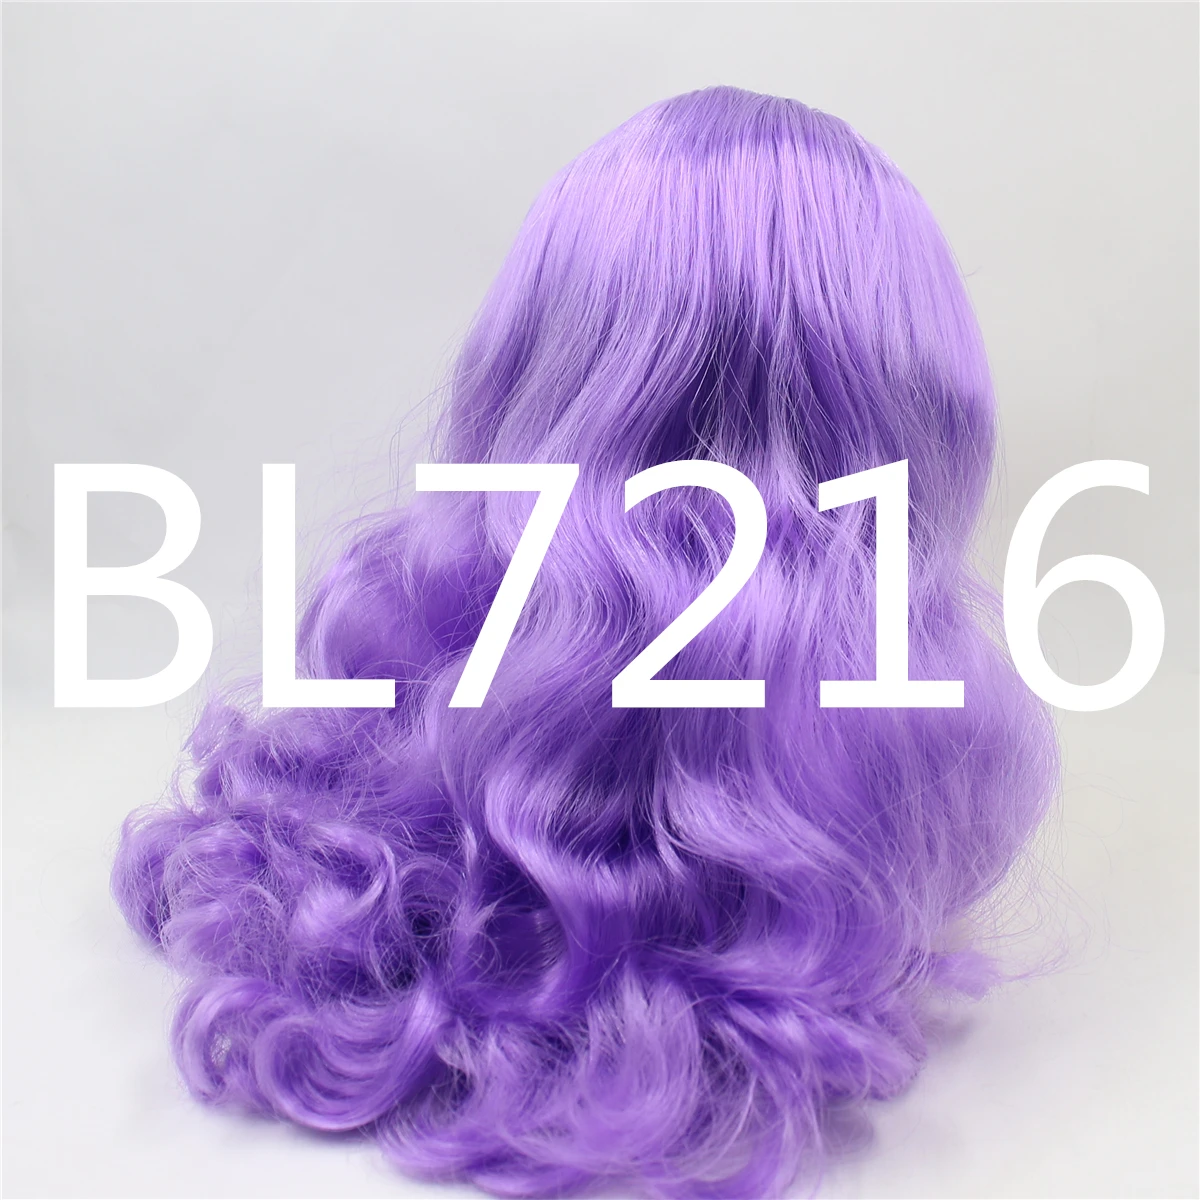 Neo Blythe Doll Purple Hair with Takara RBL Scalp Dome 1